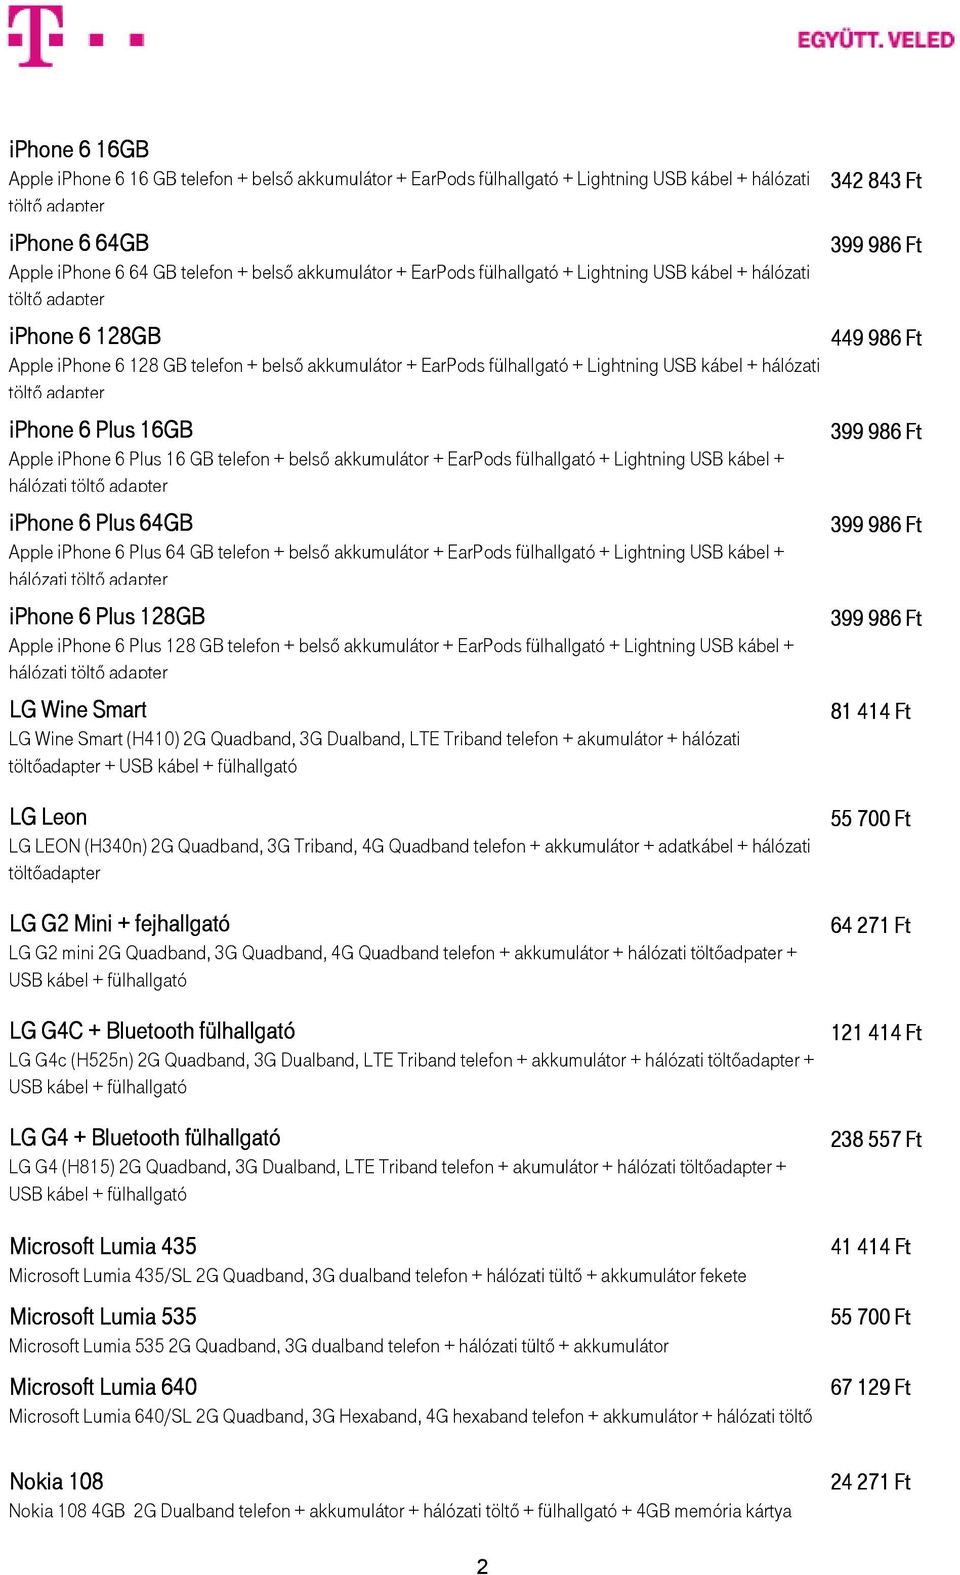 EarPods + Lightning USB kábel + iphone 6 Plus 64GB Apple iphone 6 Plus 64 GB telefon + belsı + EarPods + Lightning USB kábel + iphone 6 Plus 128GB Apple iphone 6 Plus 128 GB telefon + belsı + EarPods